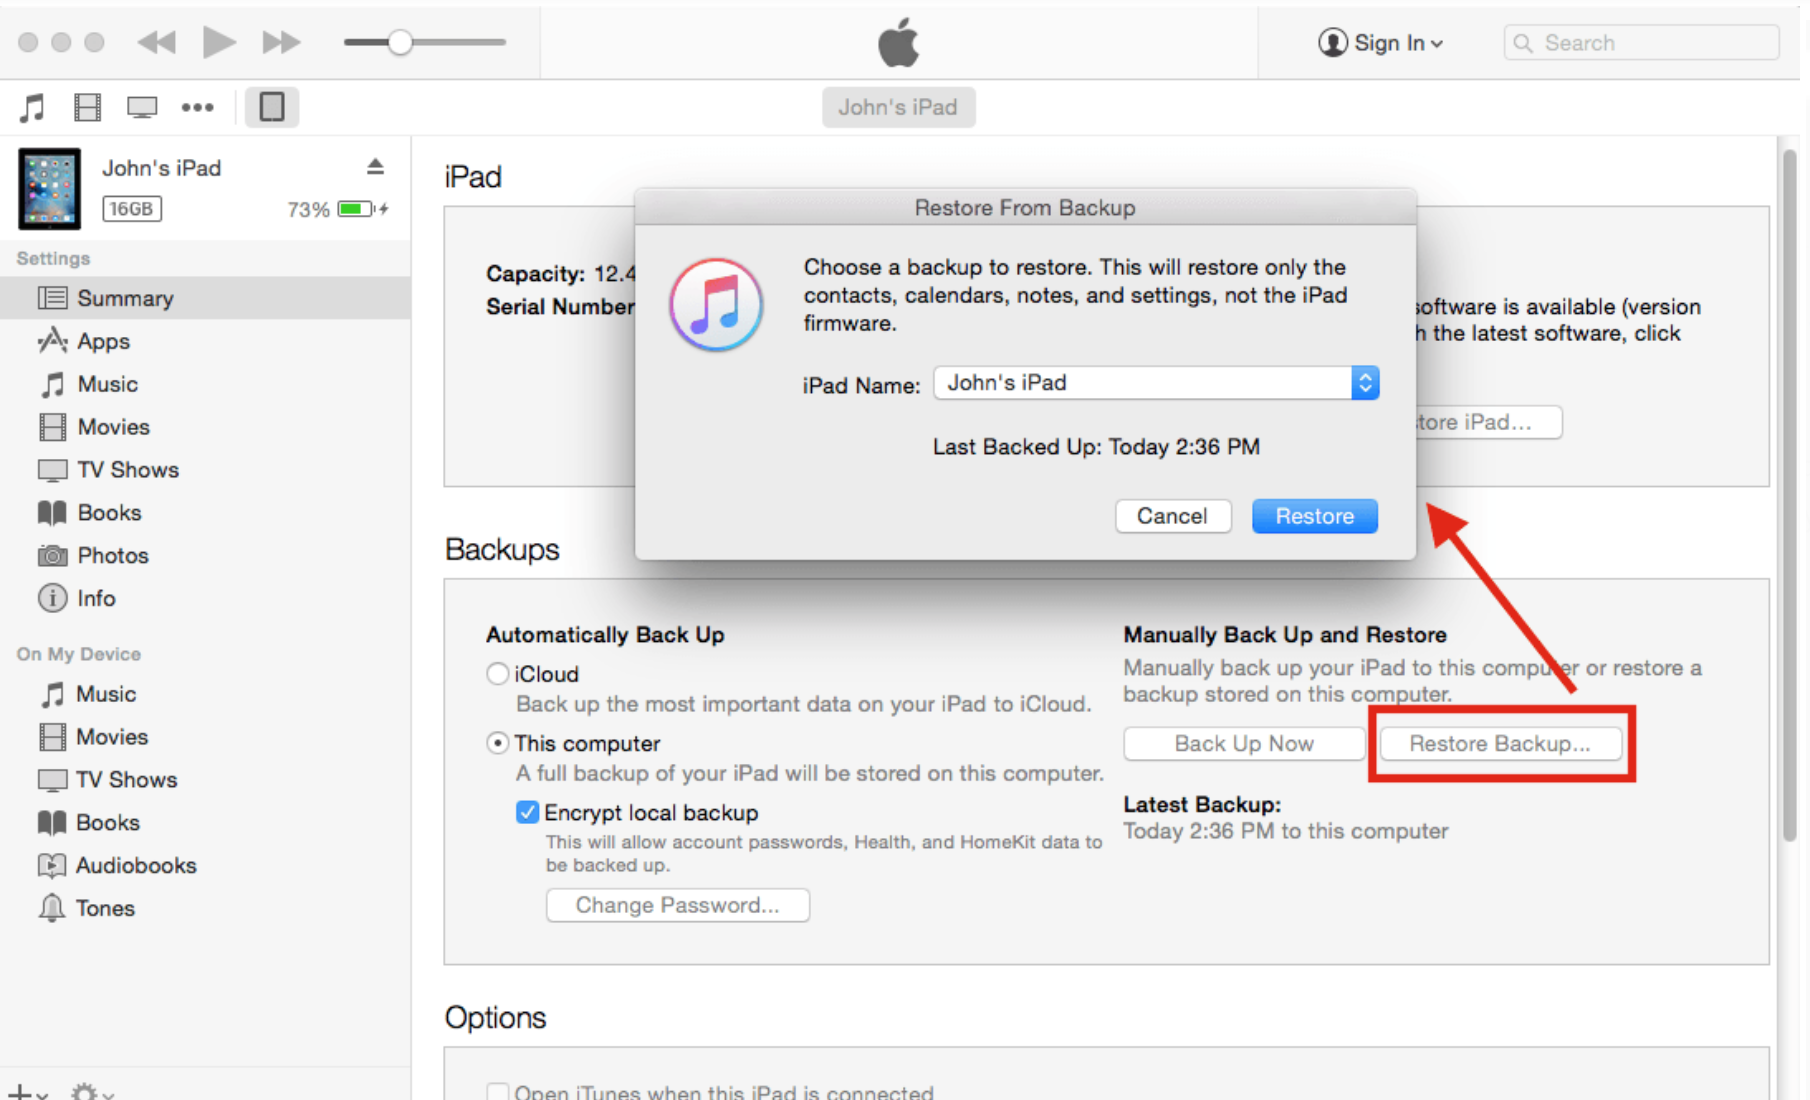 unlock-iPad-without-password-via-iTunes-backup-01